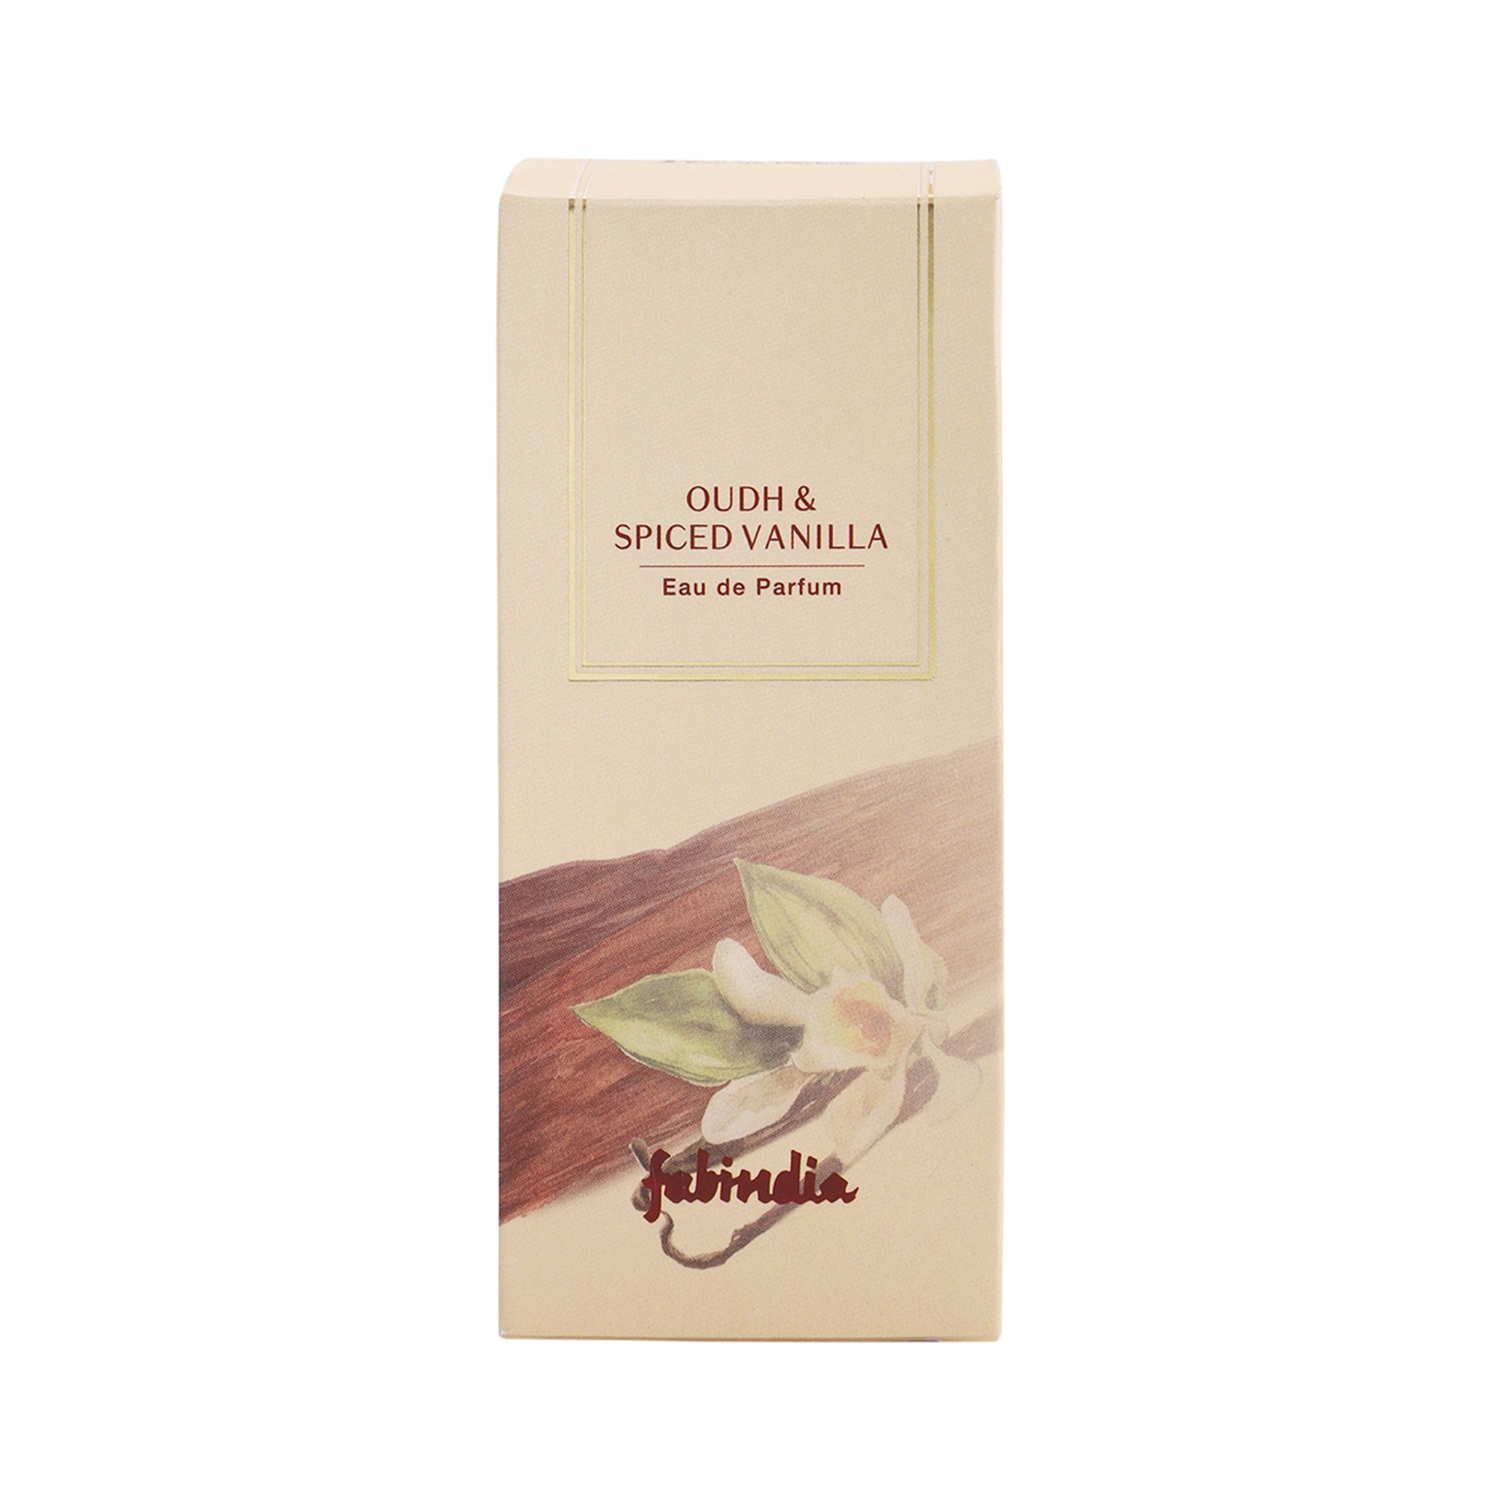 Fabessentials by Fabindia | Fabessentials by Fabindia Eau De Parfum Oudh & spiced vanilla (100ml)